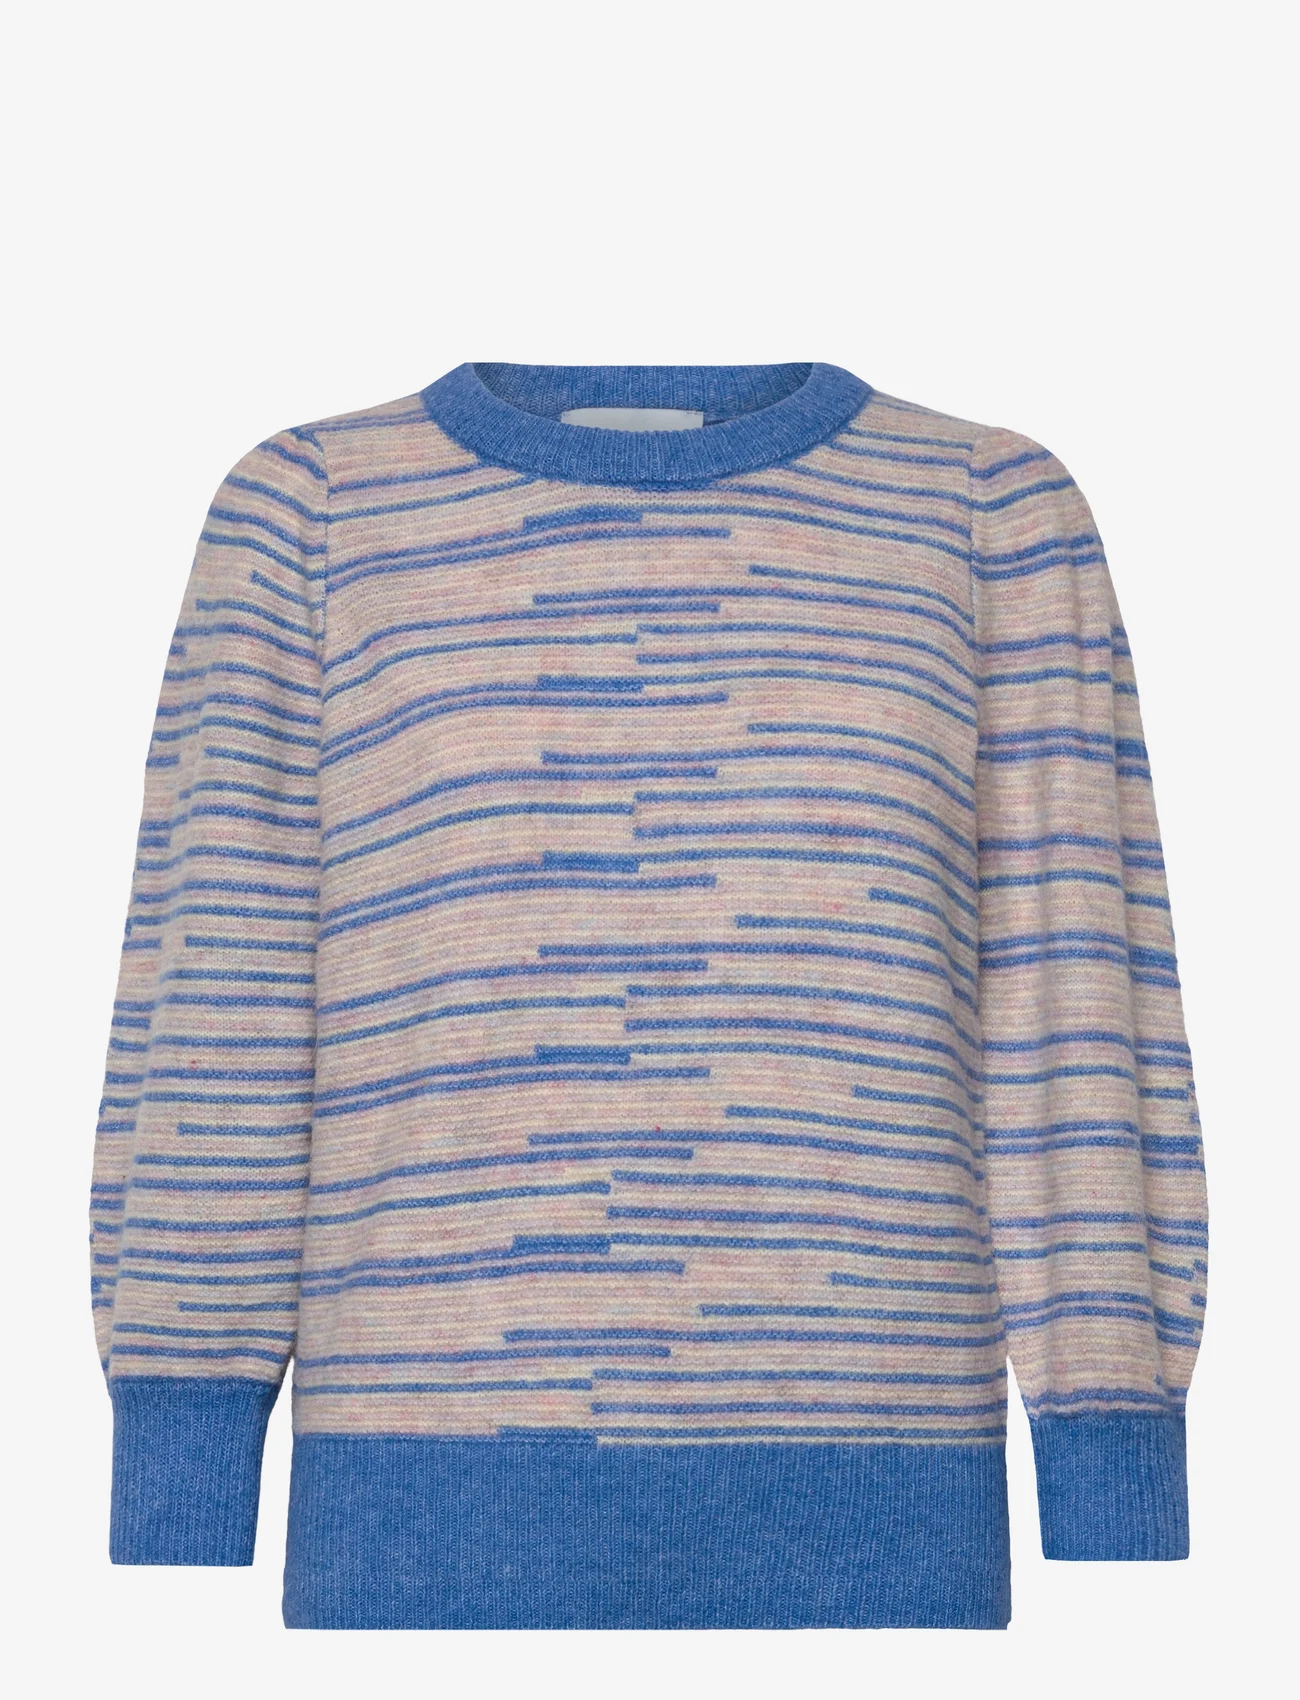 Minus - Marilou 3/4 Sleeve Knit Pullover - trøjer - dresden blue stripe - 0